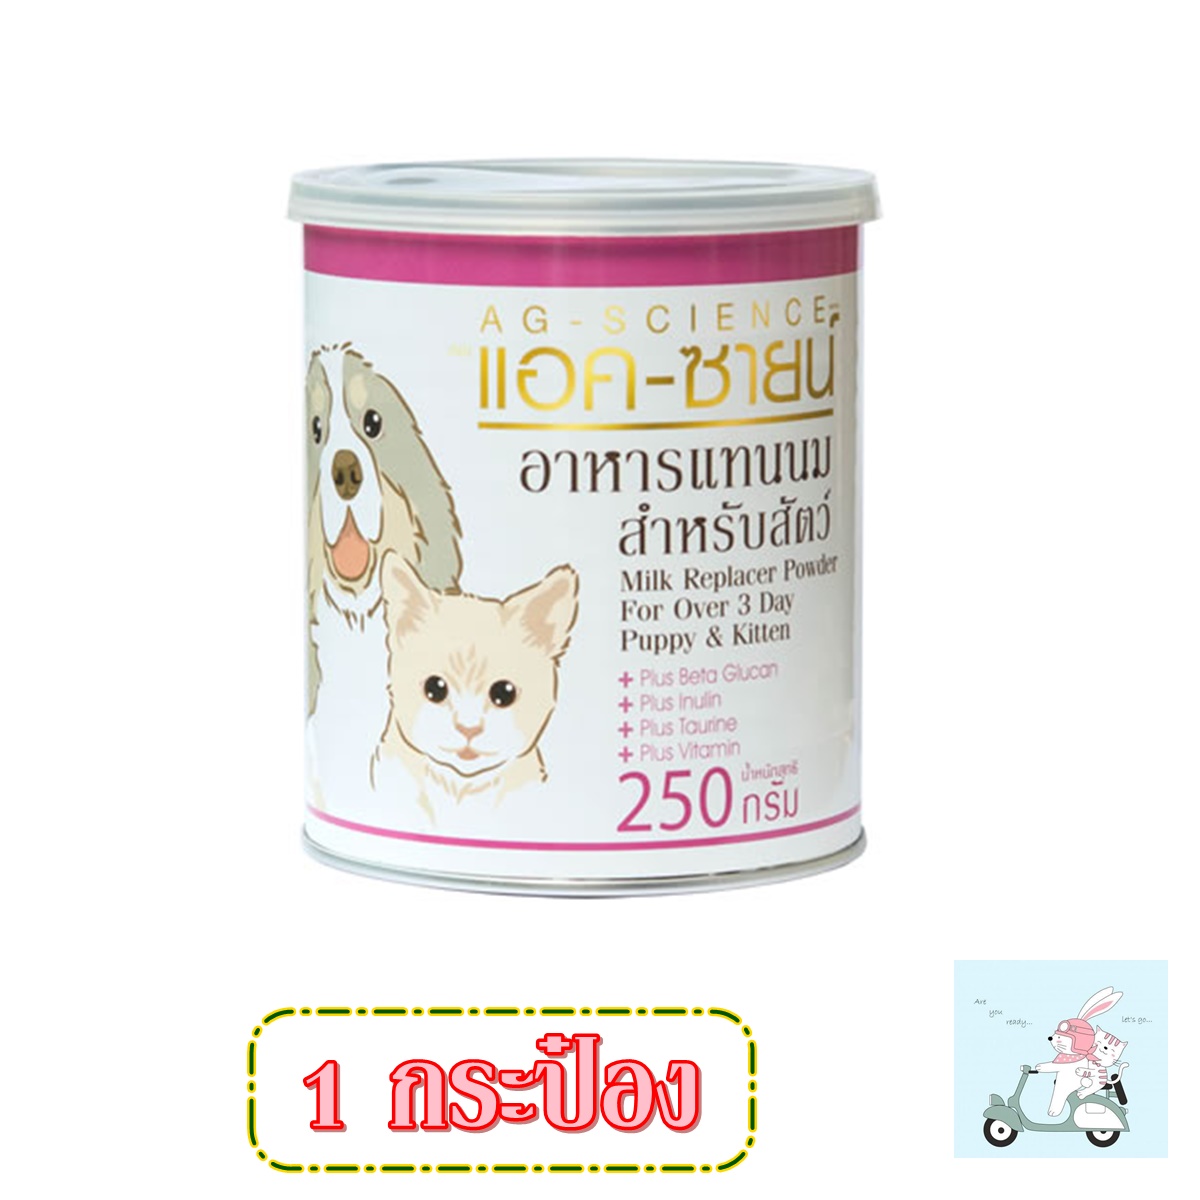 AG-SCIENCE นมผง นมวัวผง สำหรับลูกสุนัข ลูกแมว น้ำหนัก 250 กรัม